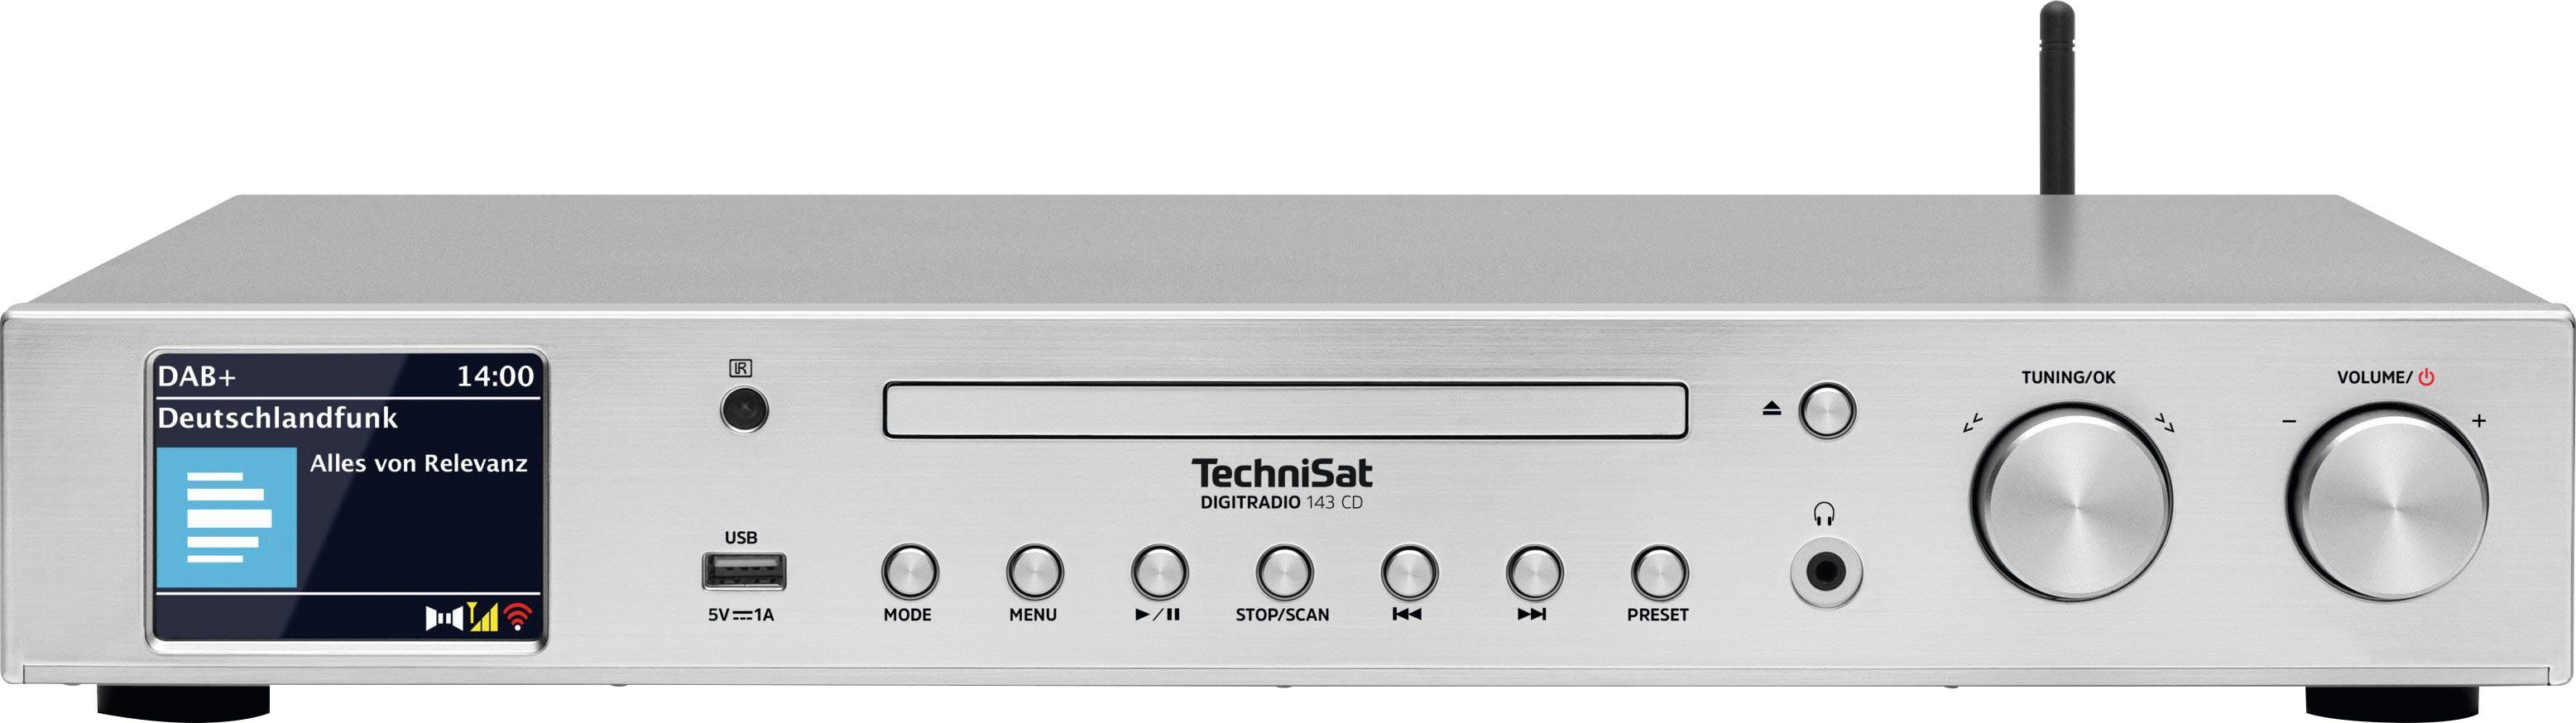 DIGITRADIO TechniSat (DAB) 143 silber (DAB), Digitalradio (Digitalradio RDS) UKW mit (V3) Internetradio, CD